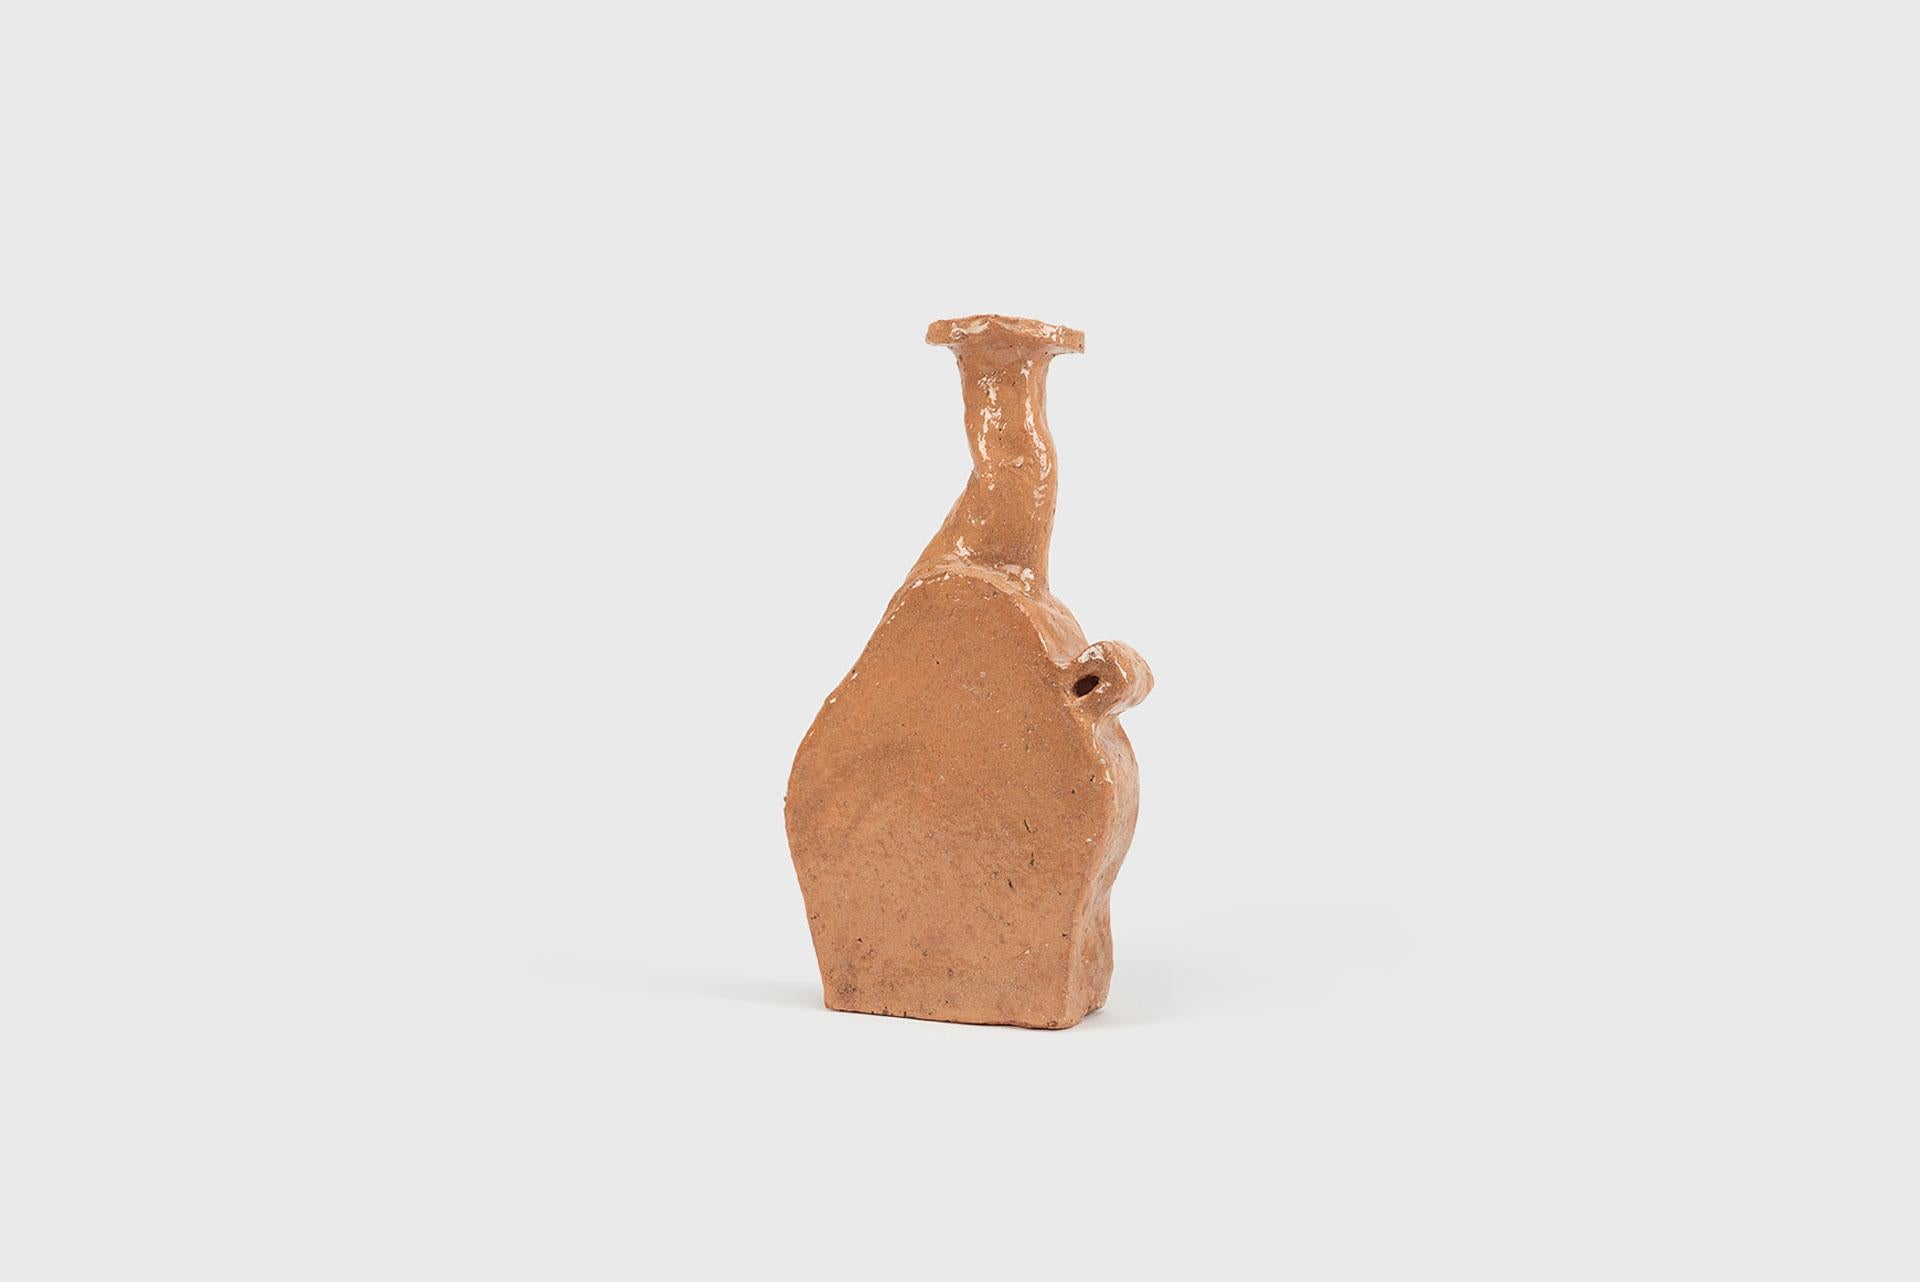 Ceramic vase model “Kltu”
From the series 